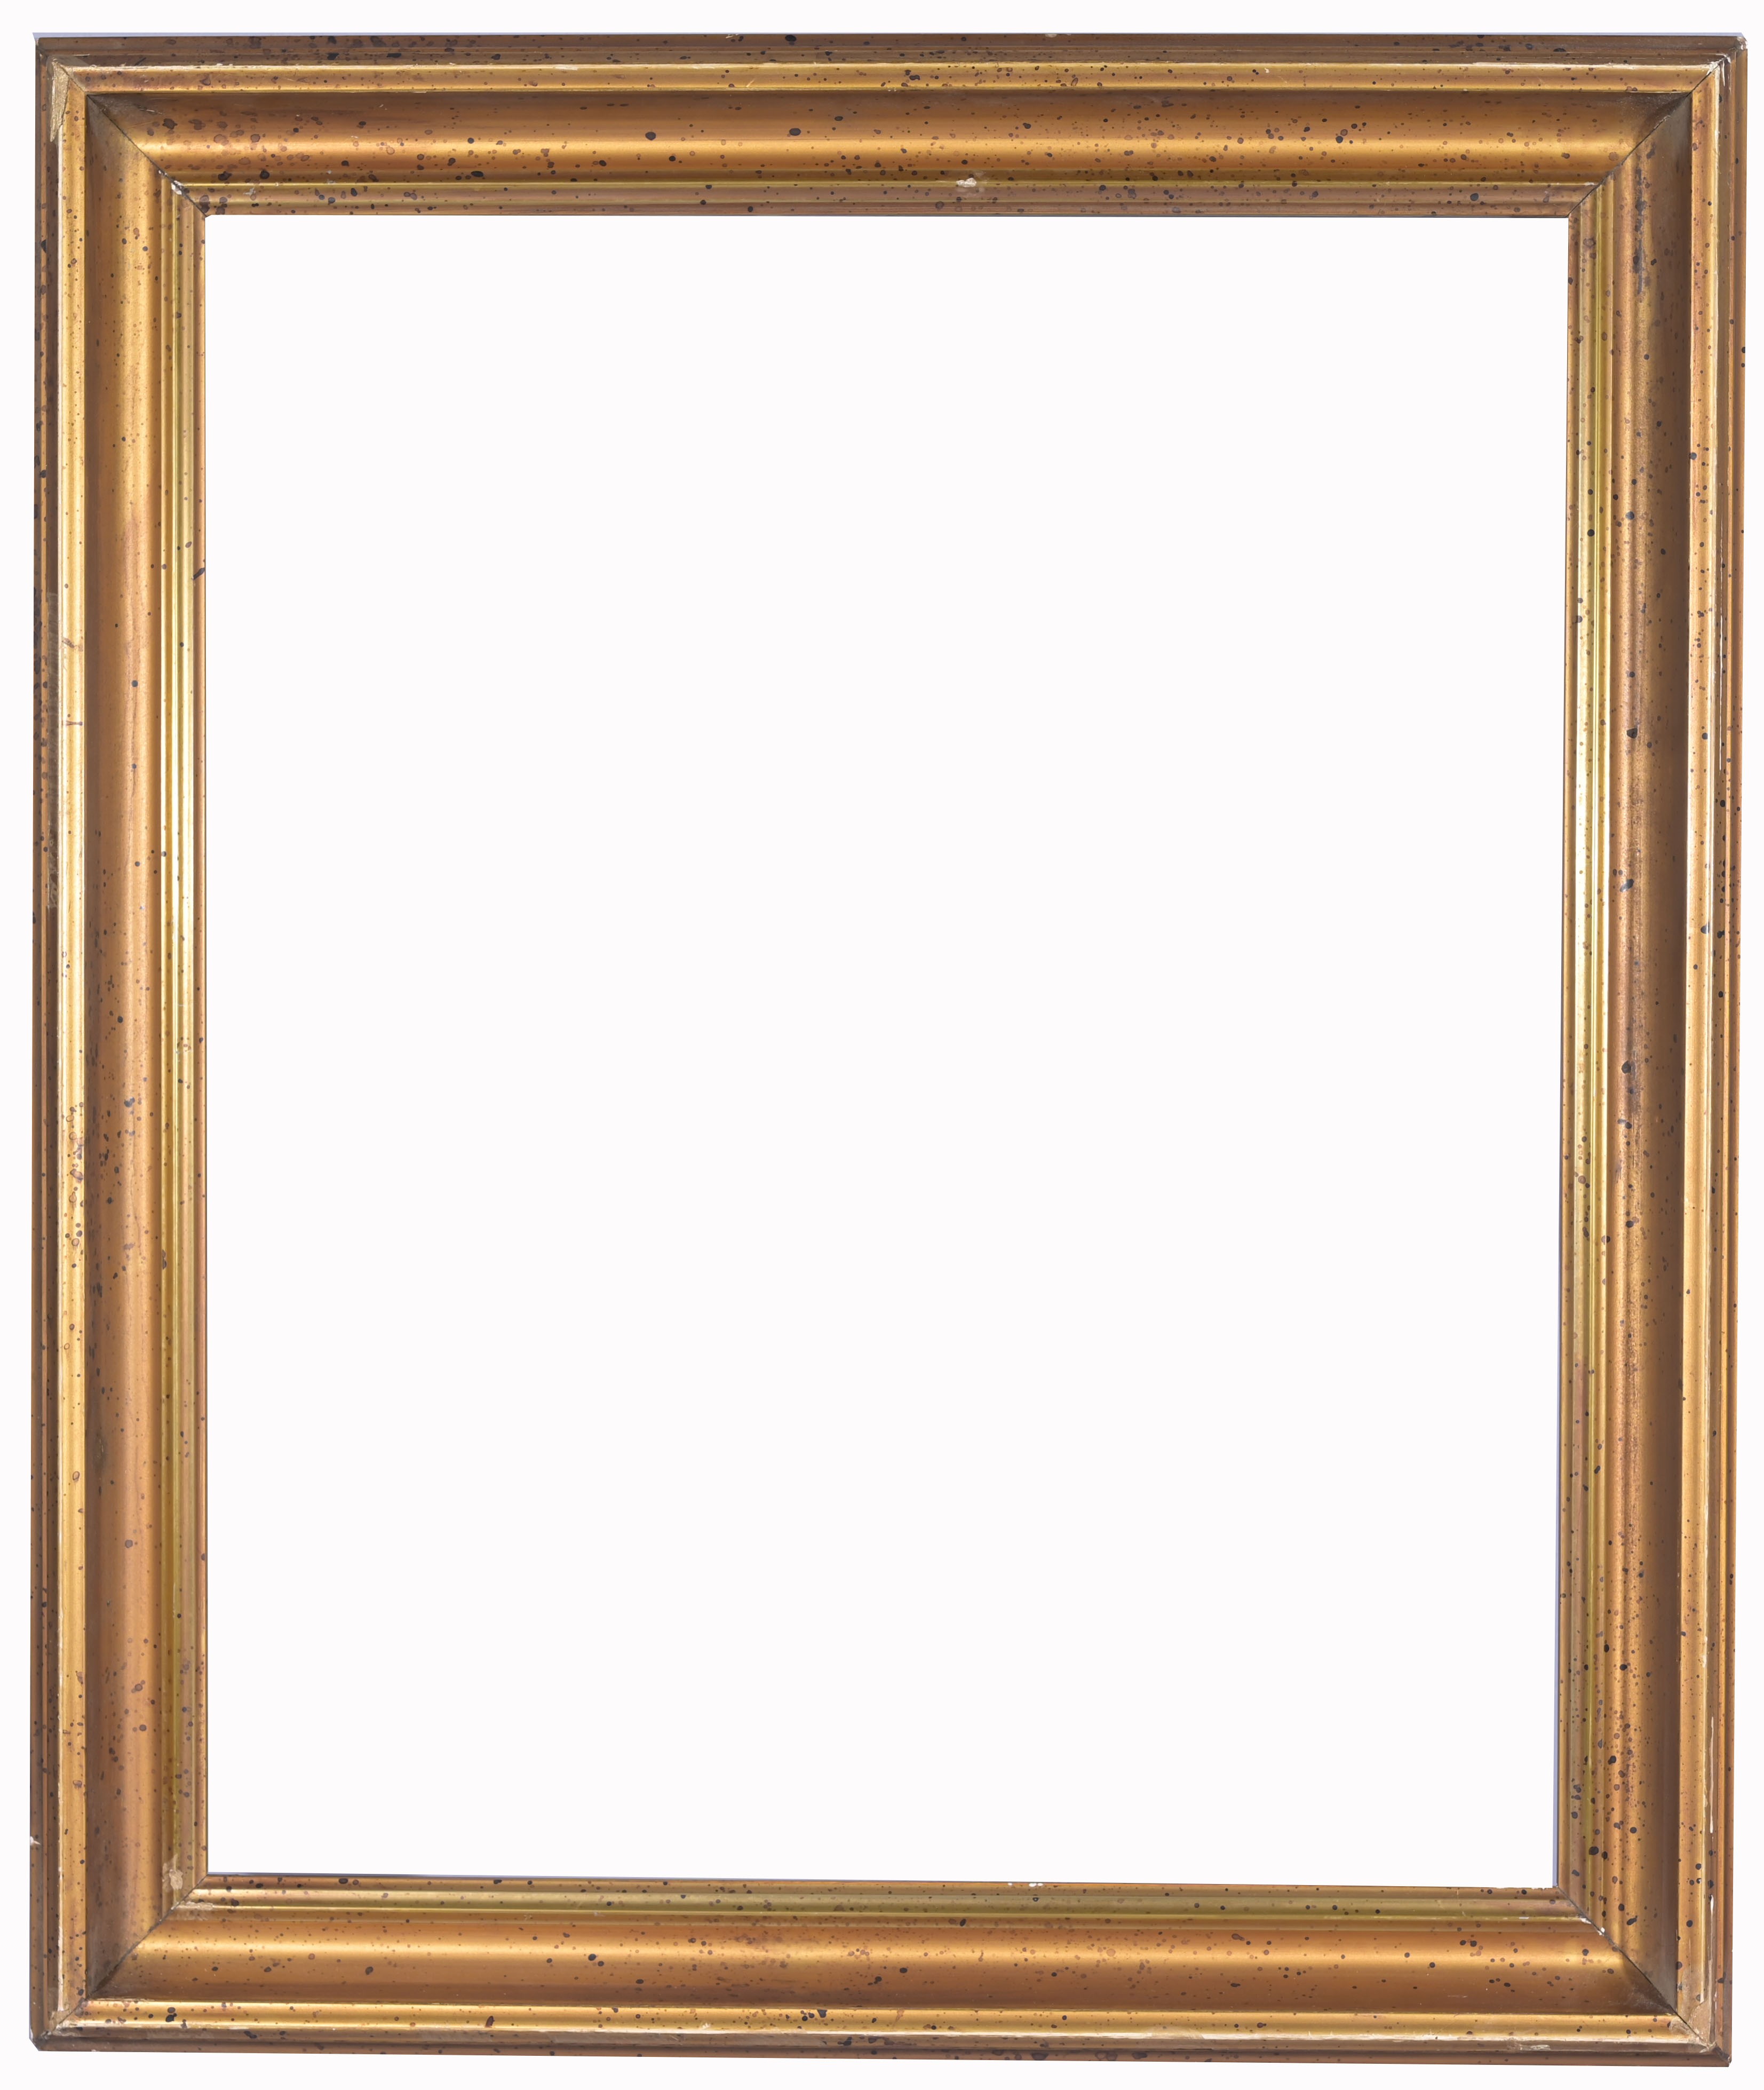 Antique Gilt Wood Frame - 19.75 x 16